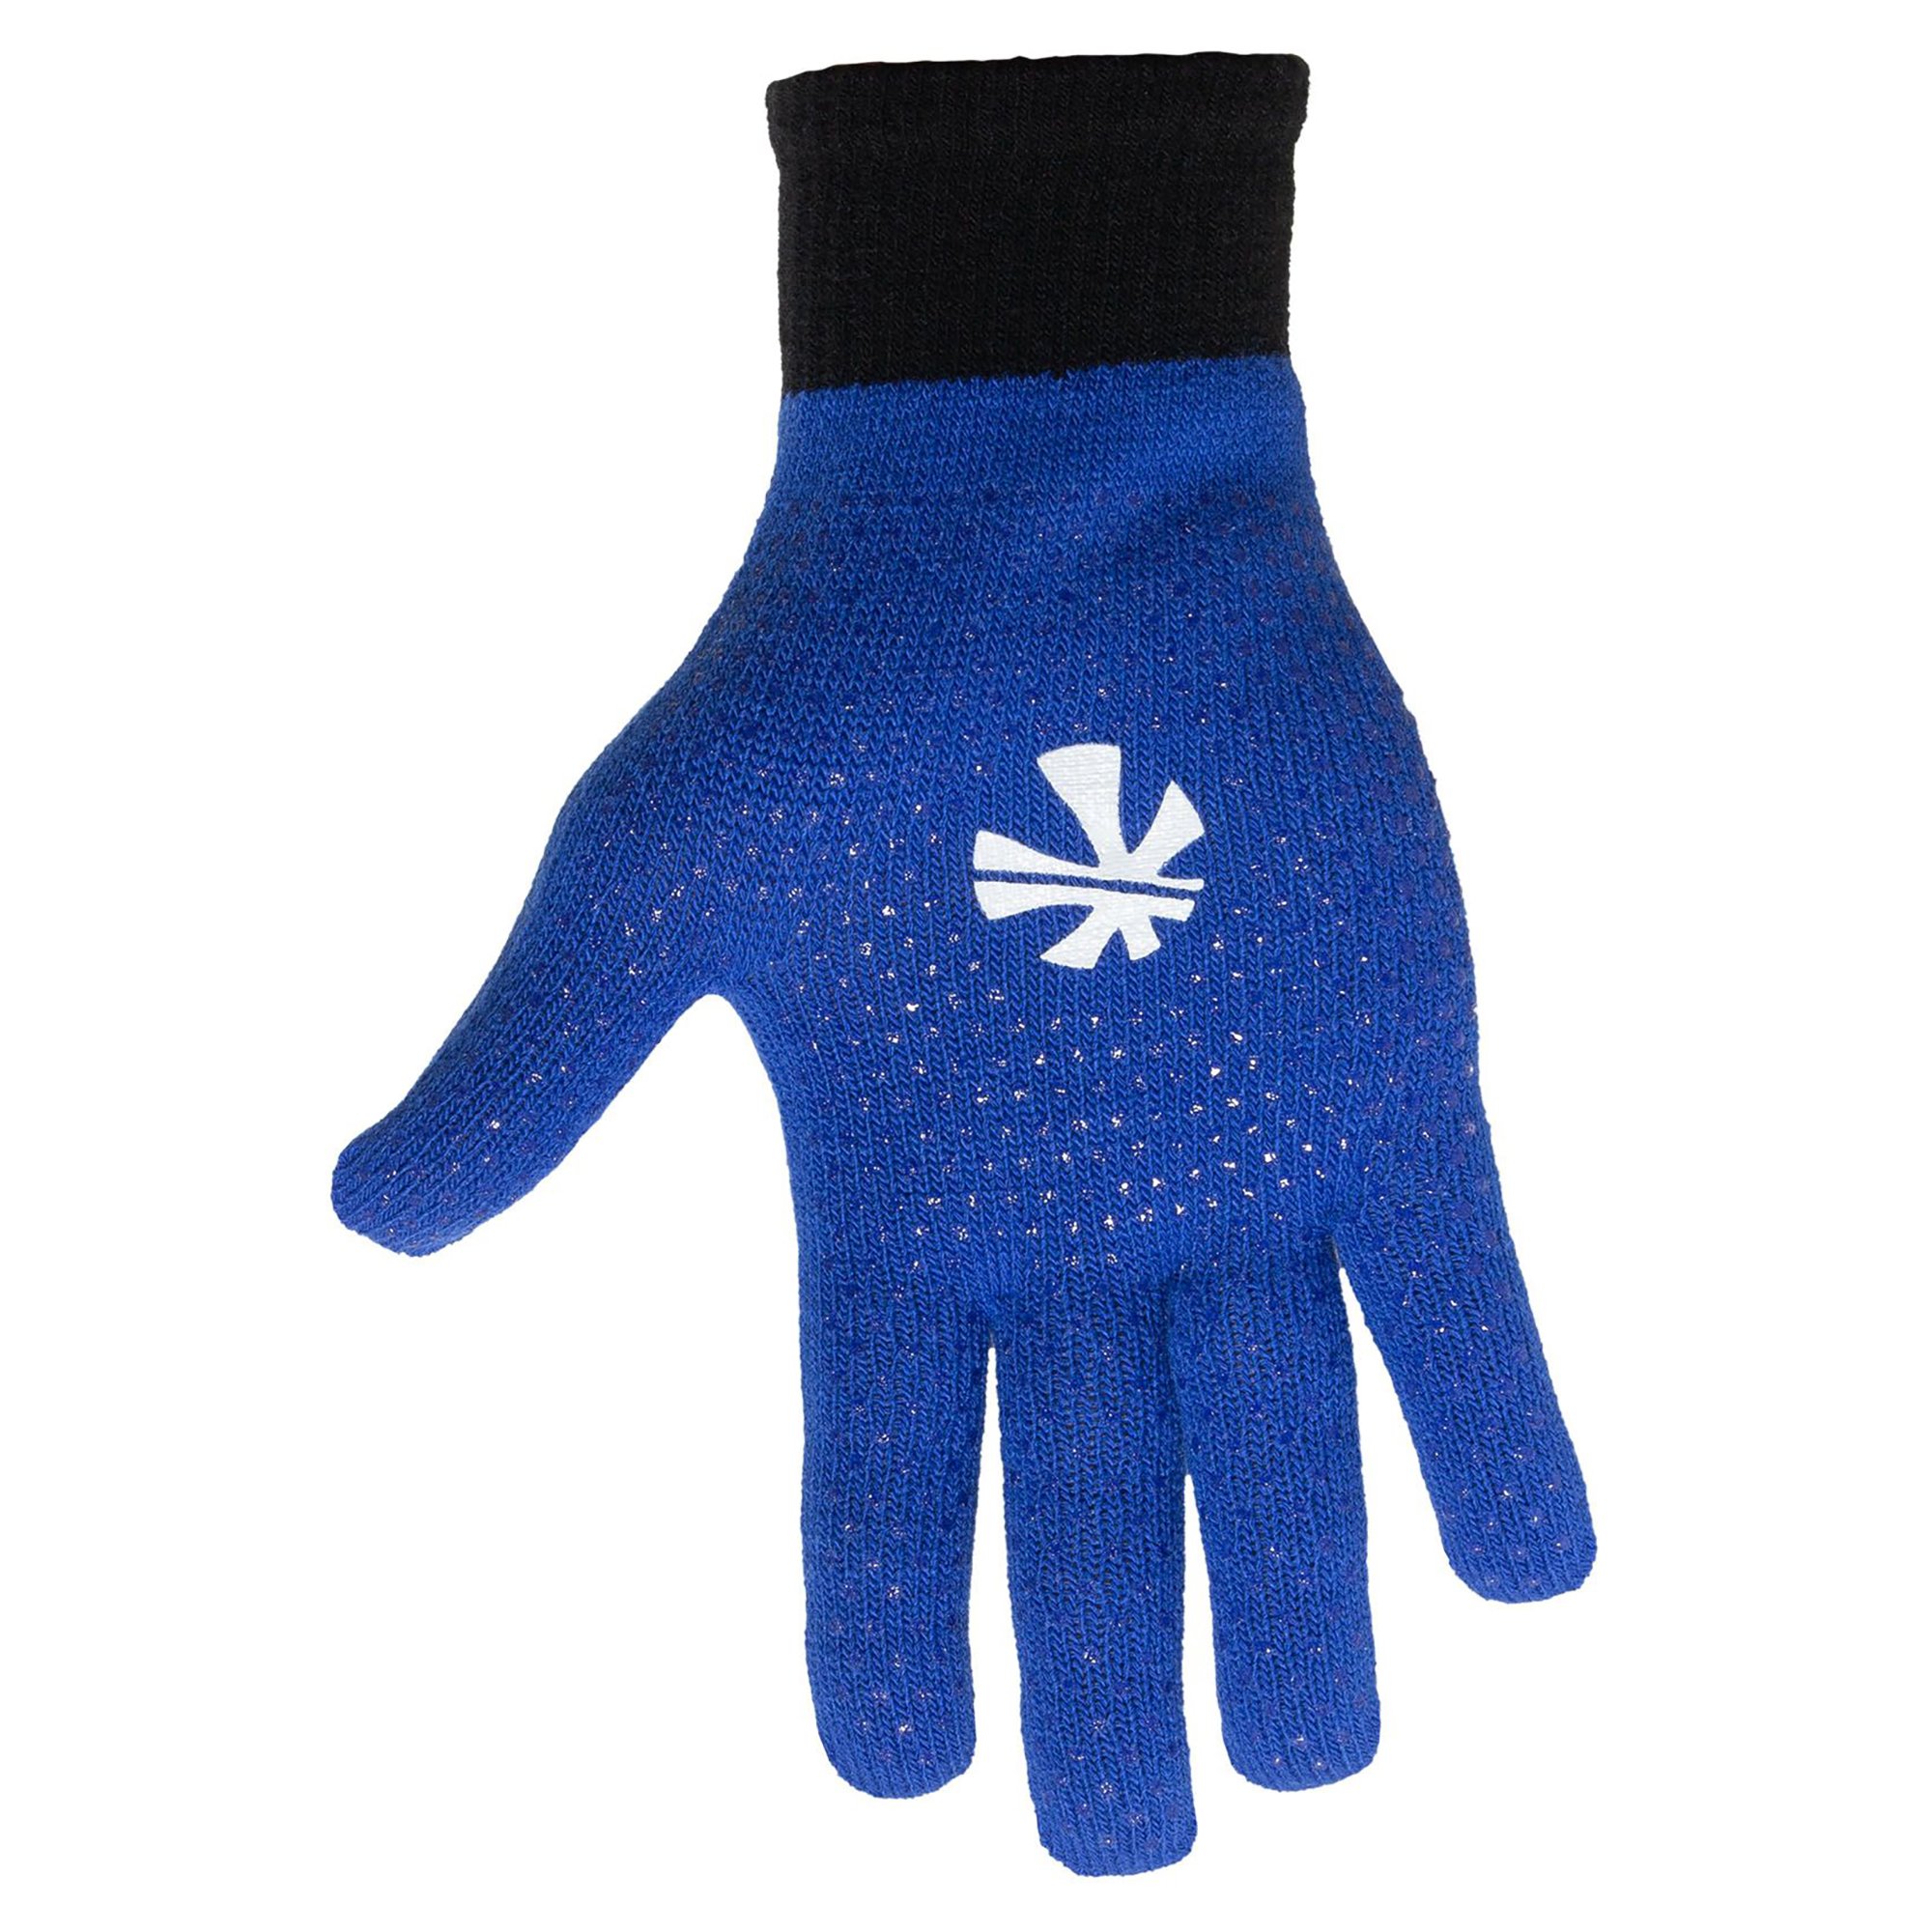 Reece Australia Knitted Ultra Grip Glove 2 in 1